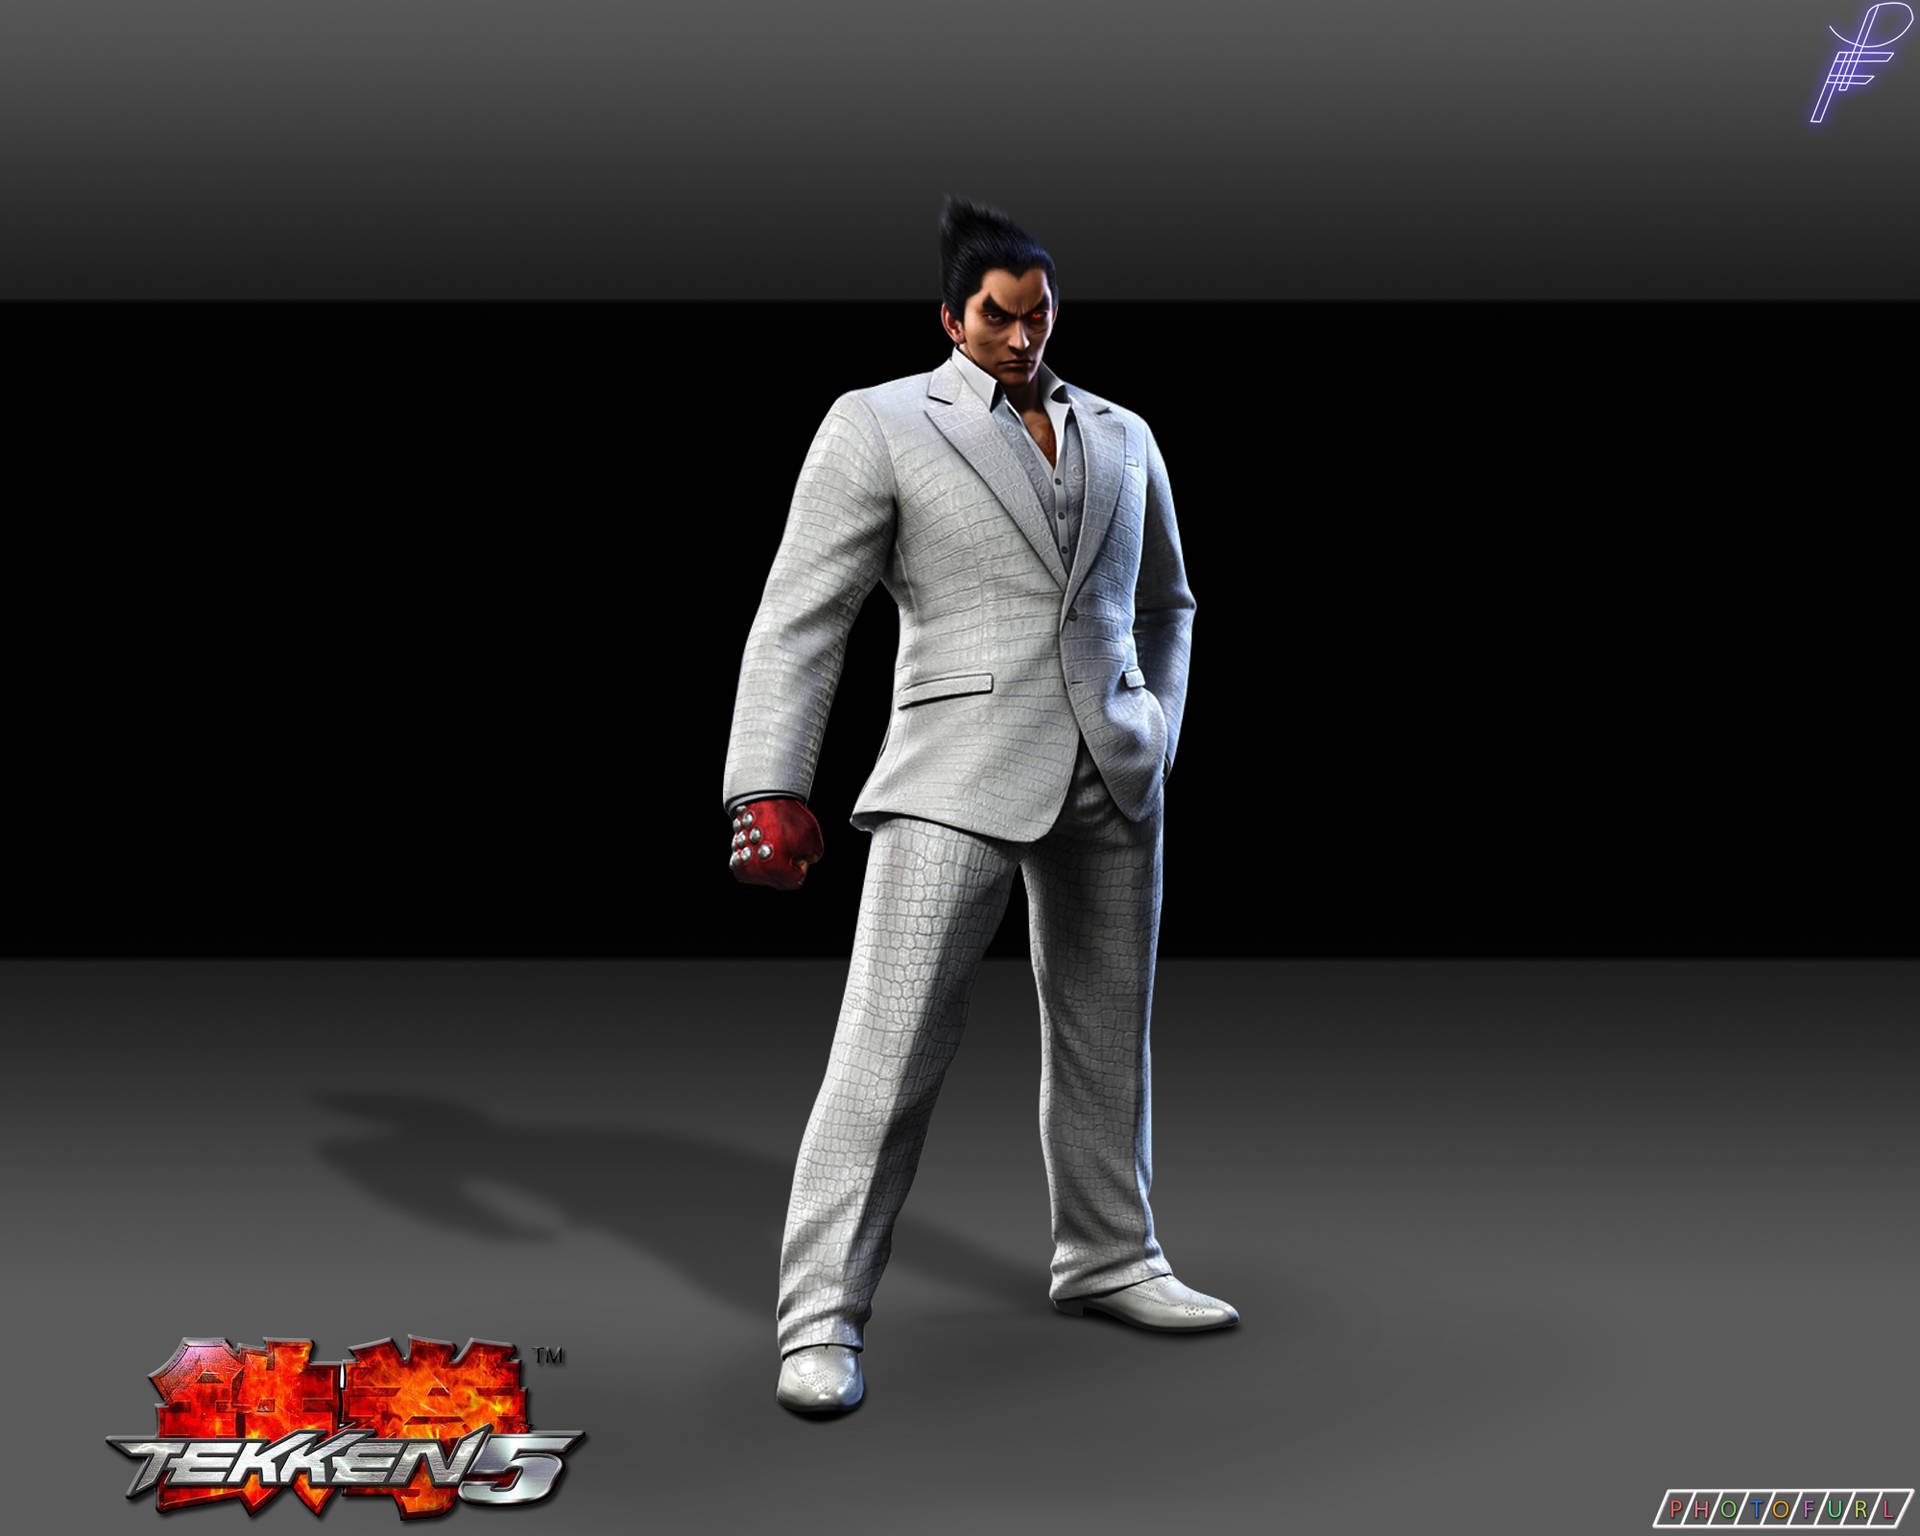 Tekken 5 Kazuya Mishima Cover Background